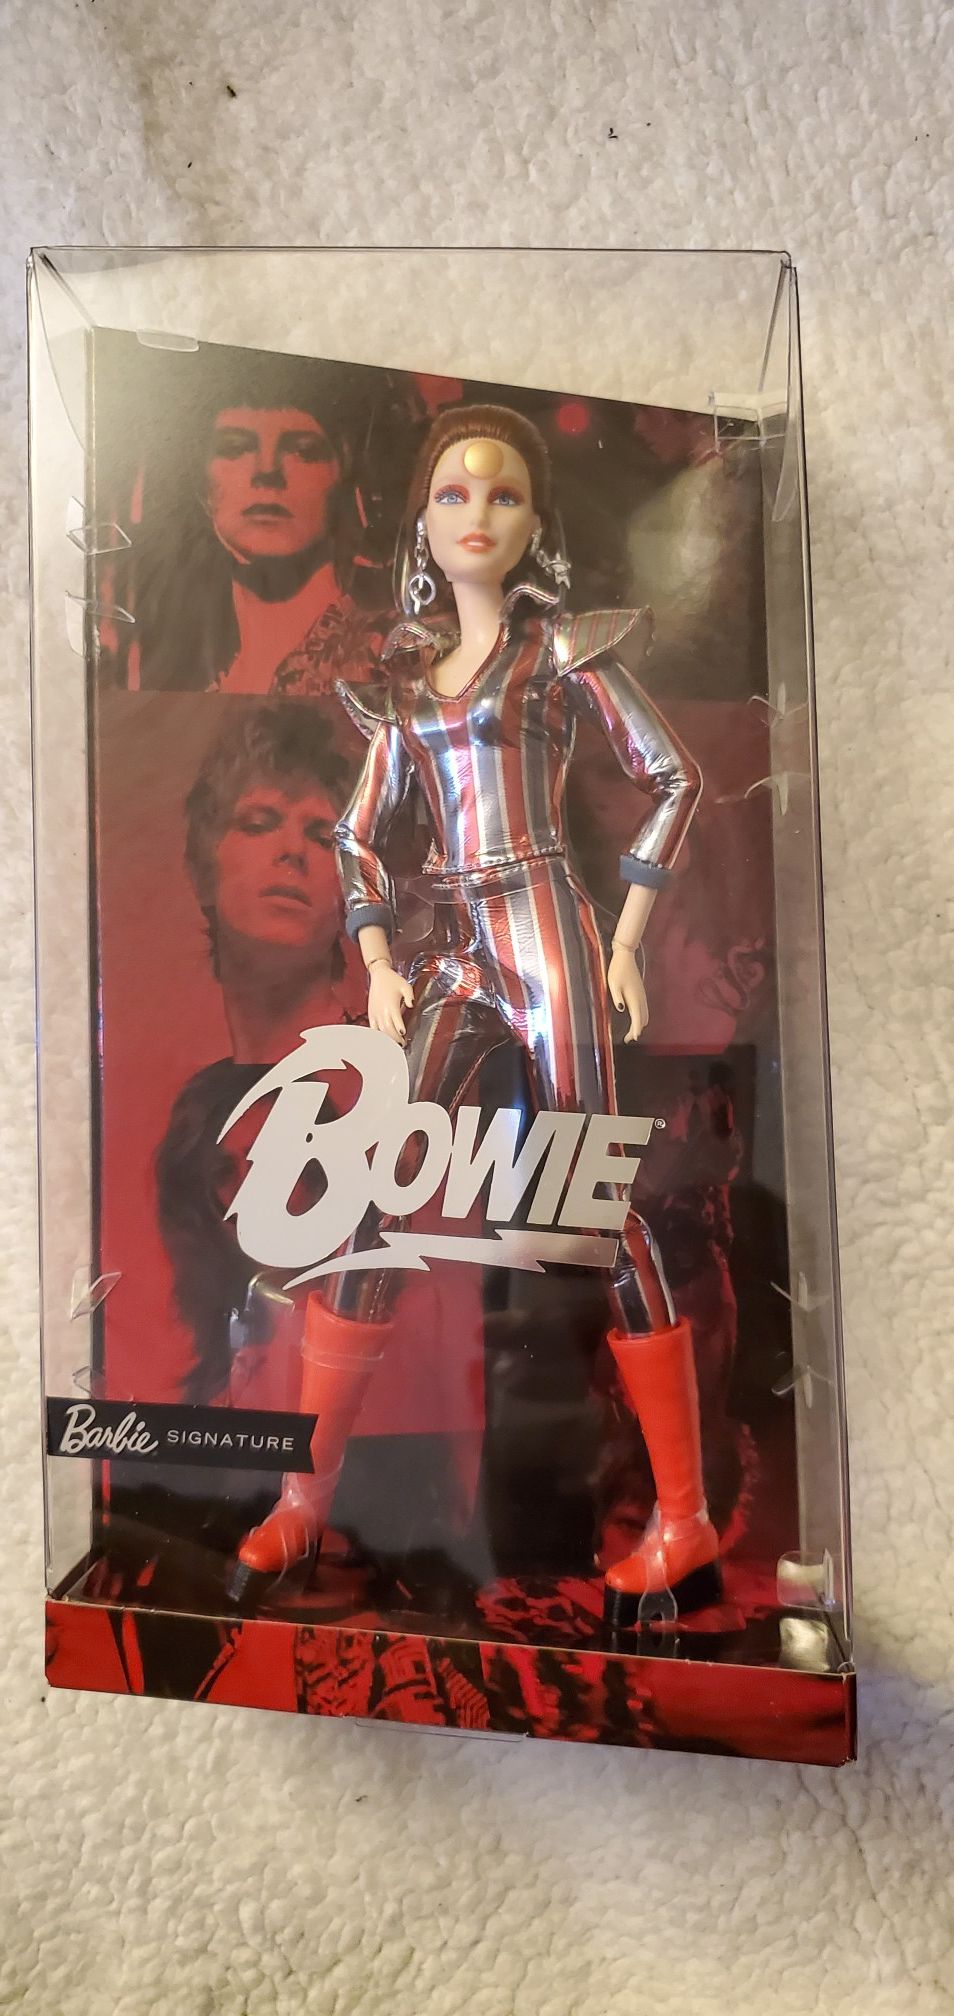 Mattel Barbie x David Bowie Signature Doll